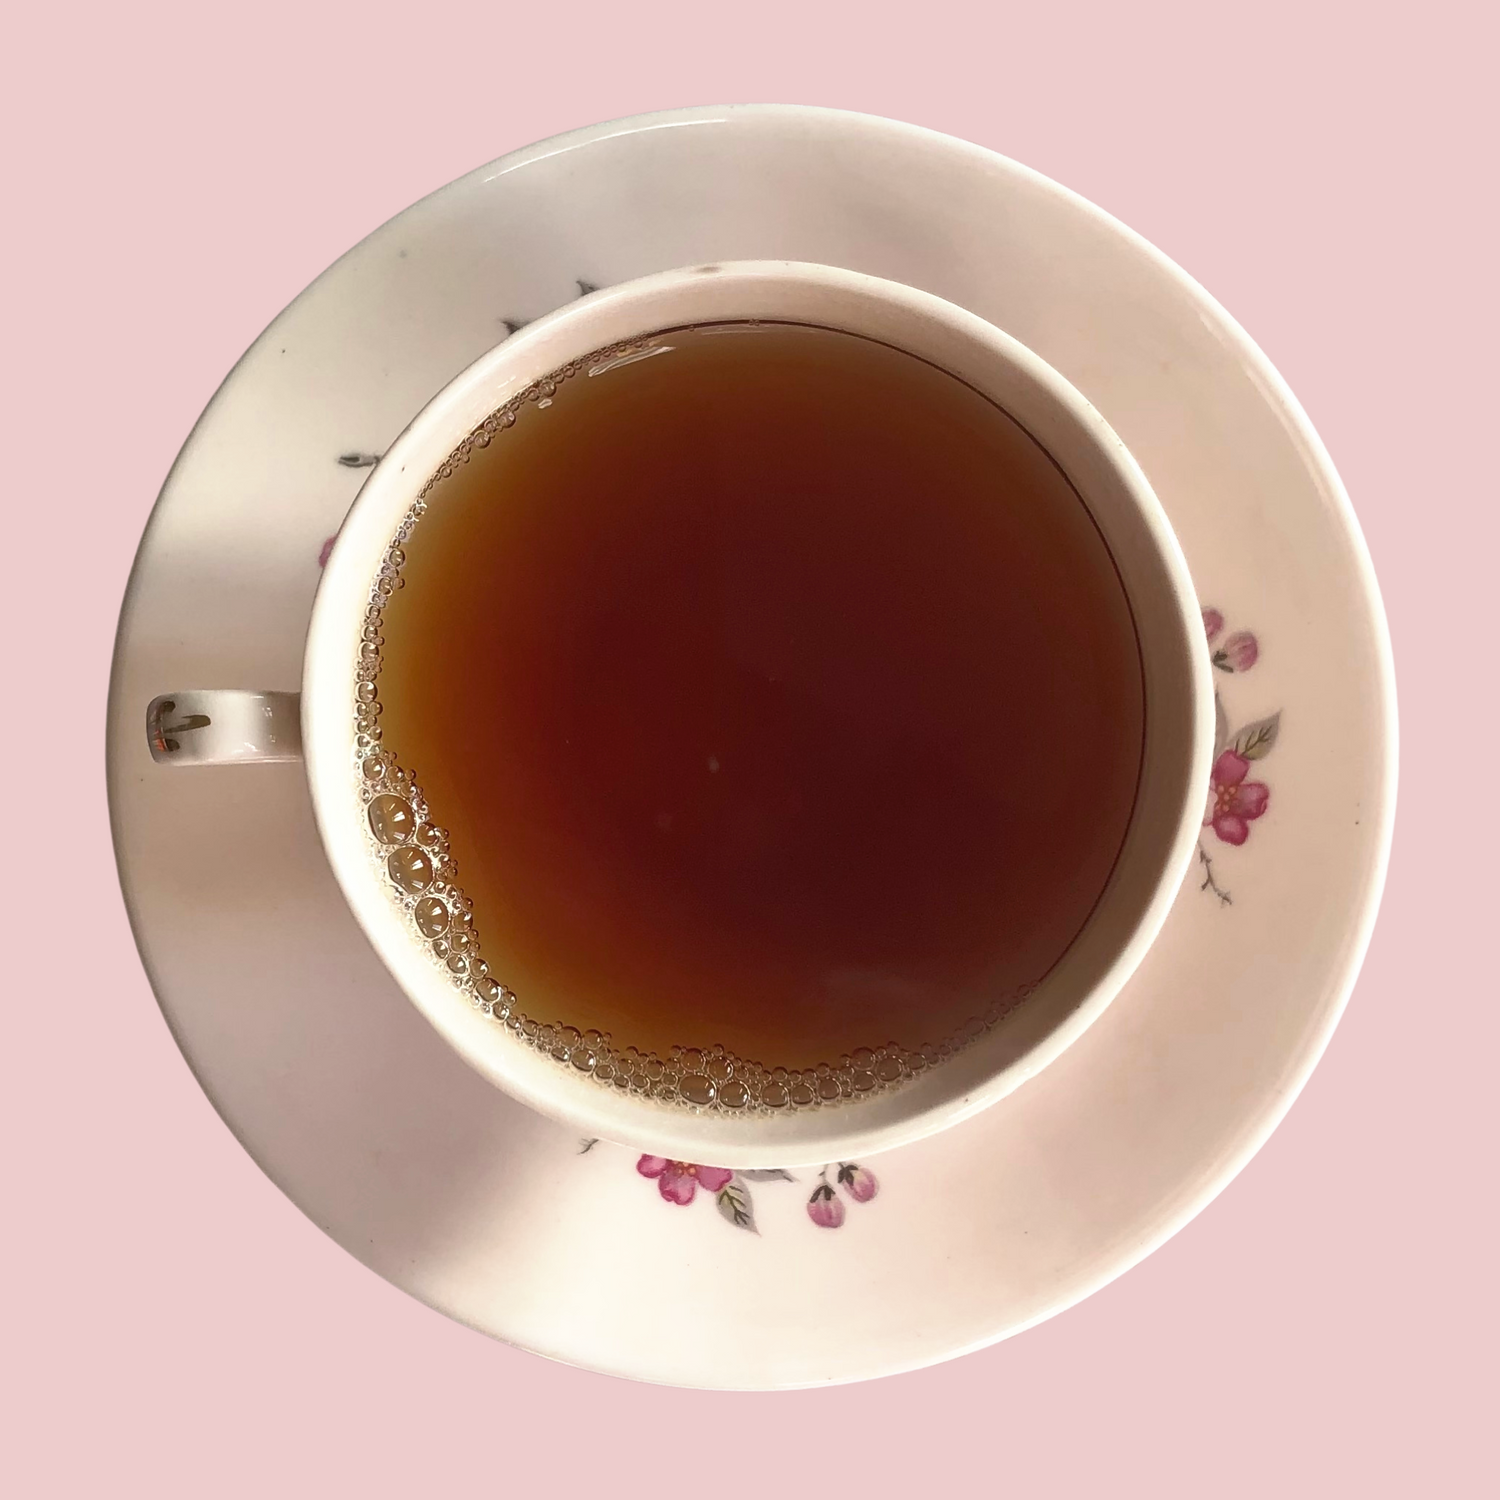 Buy Organic Roasted Tea Online - Chai Experience